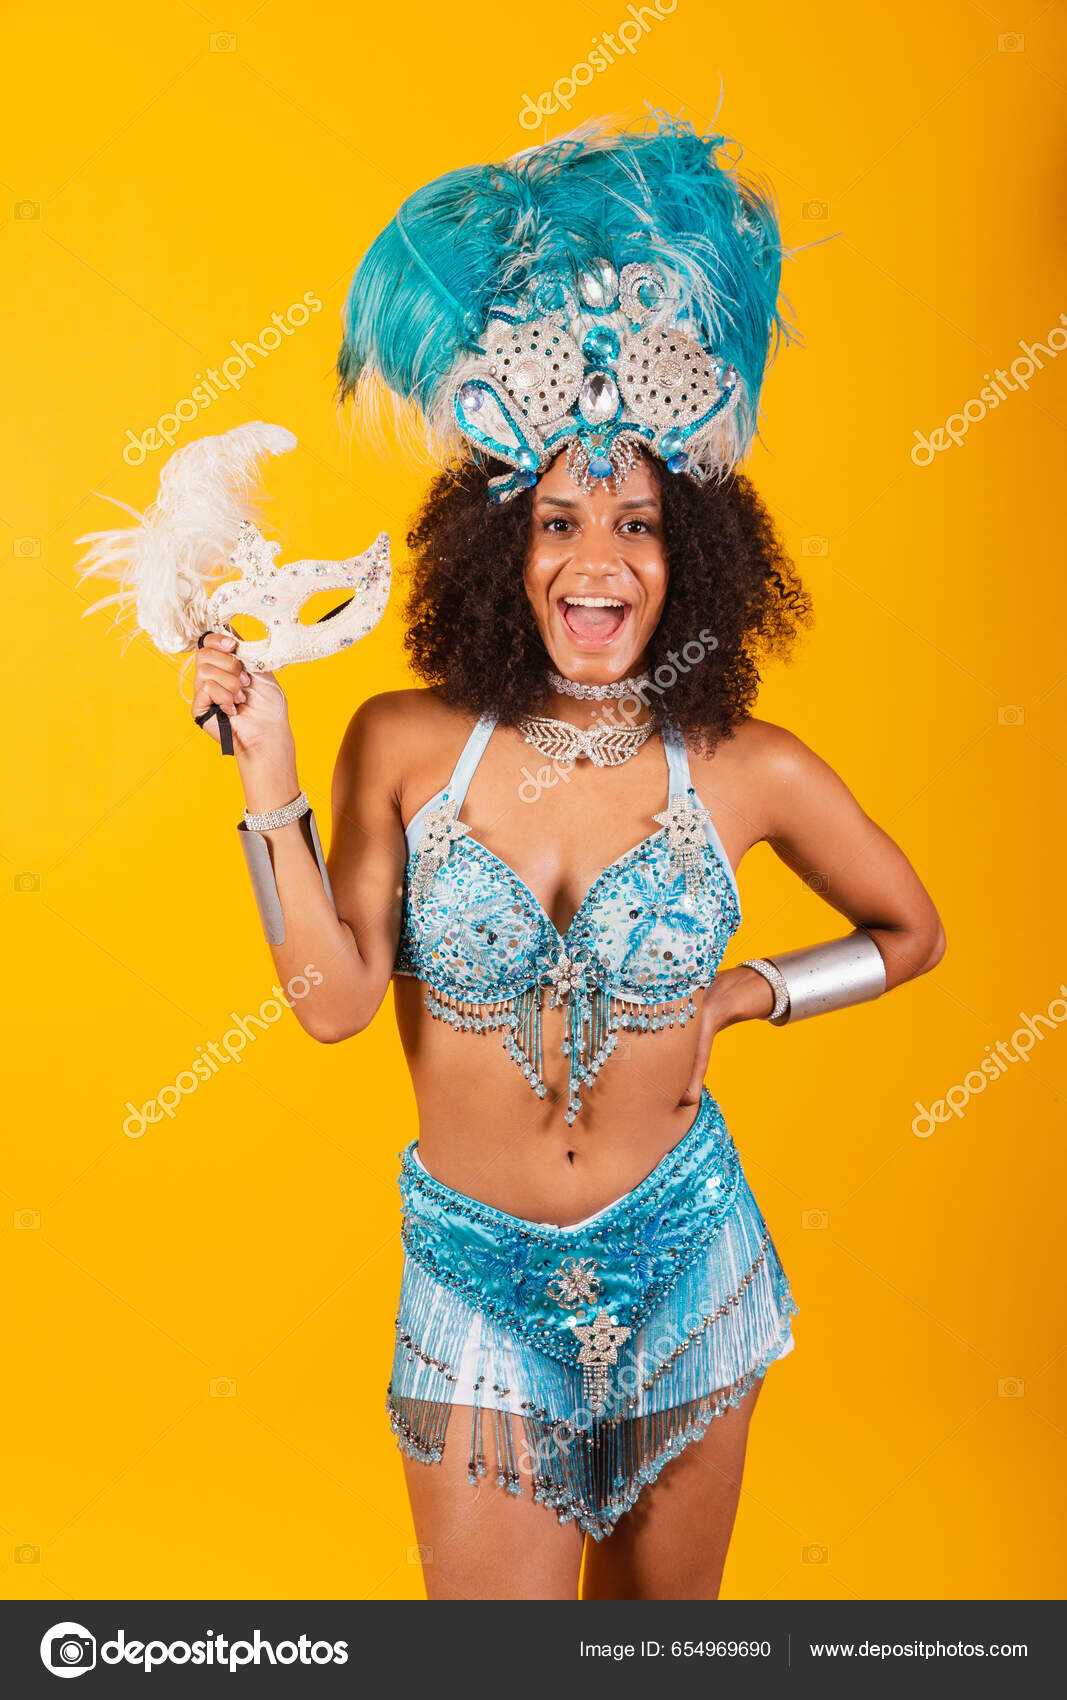 https://st5.depositphotos.com/79147440/65496/i/1600/depositphotos_654969690-stock-photo-black-woman-queen-brazilian-samba.jpg